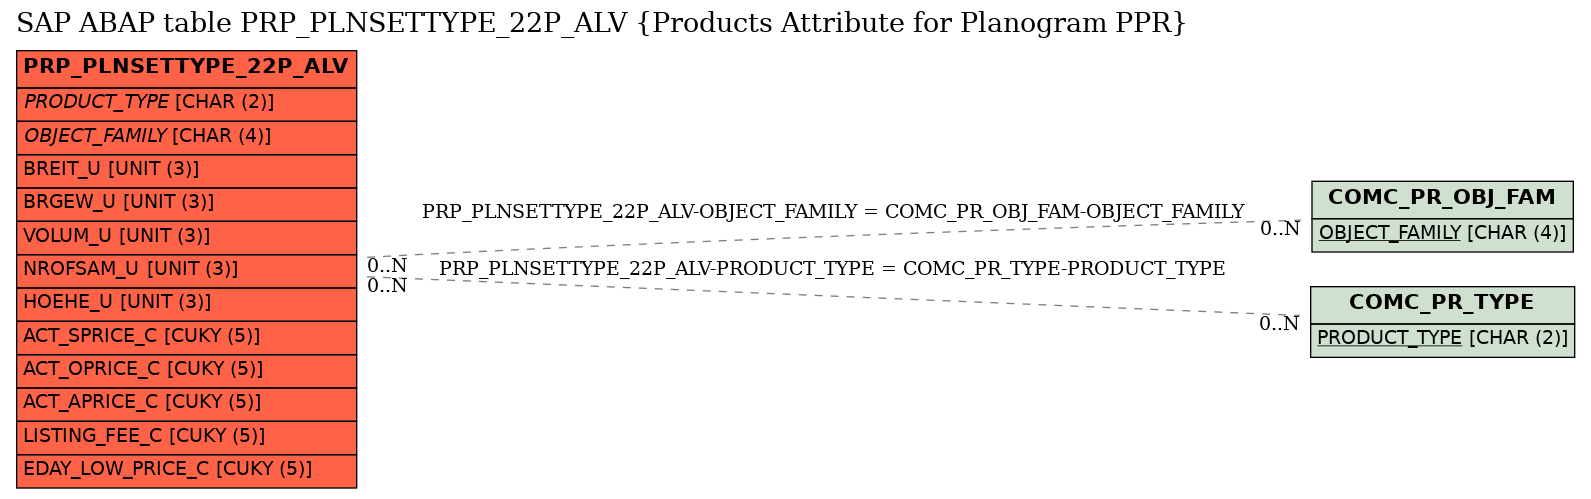 E-R Diagram for table PRP_PLNSETTYPE_22P_ALV (Products Attribute for Planogram PPR)